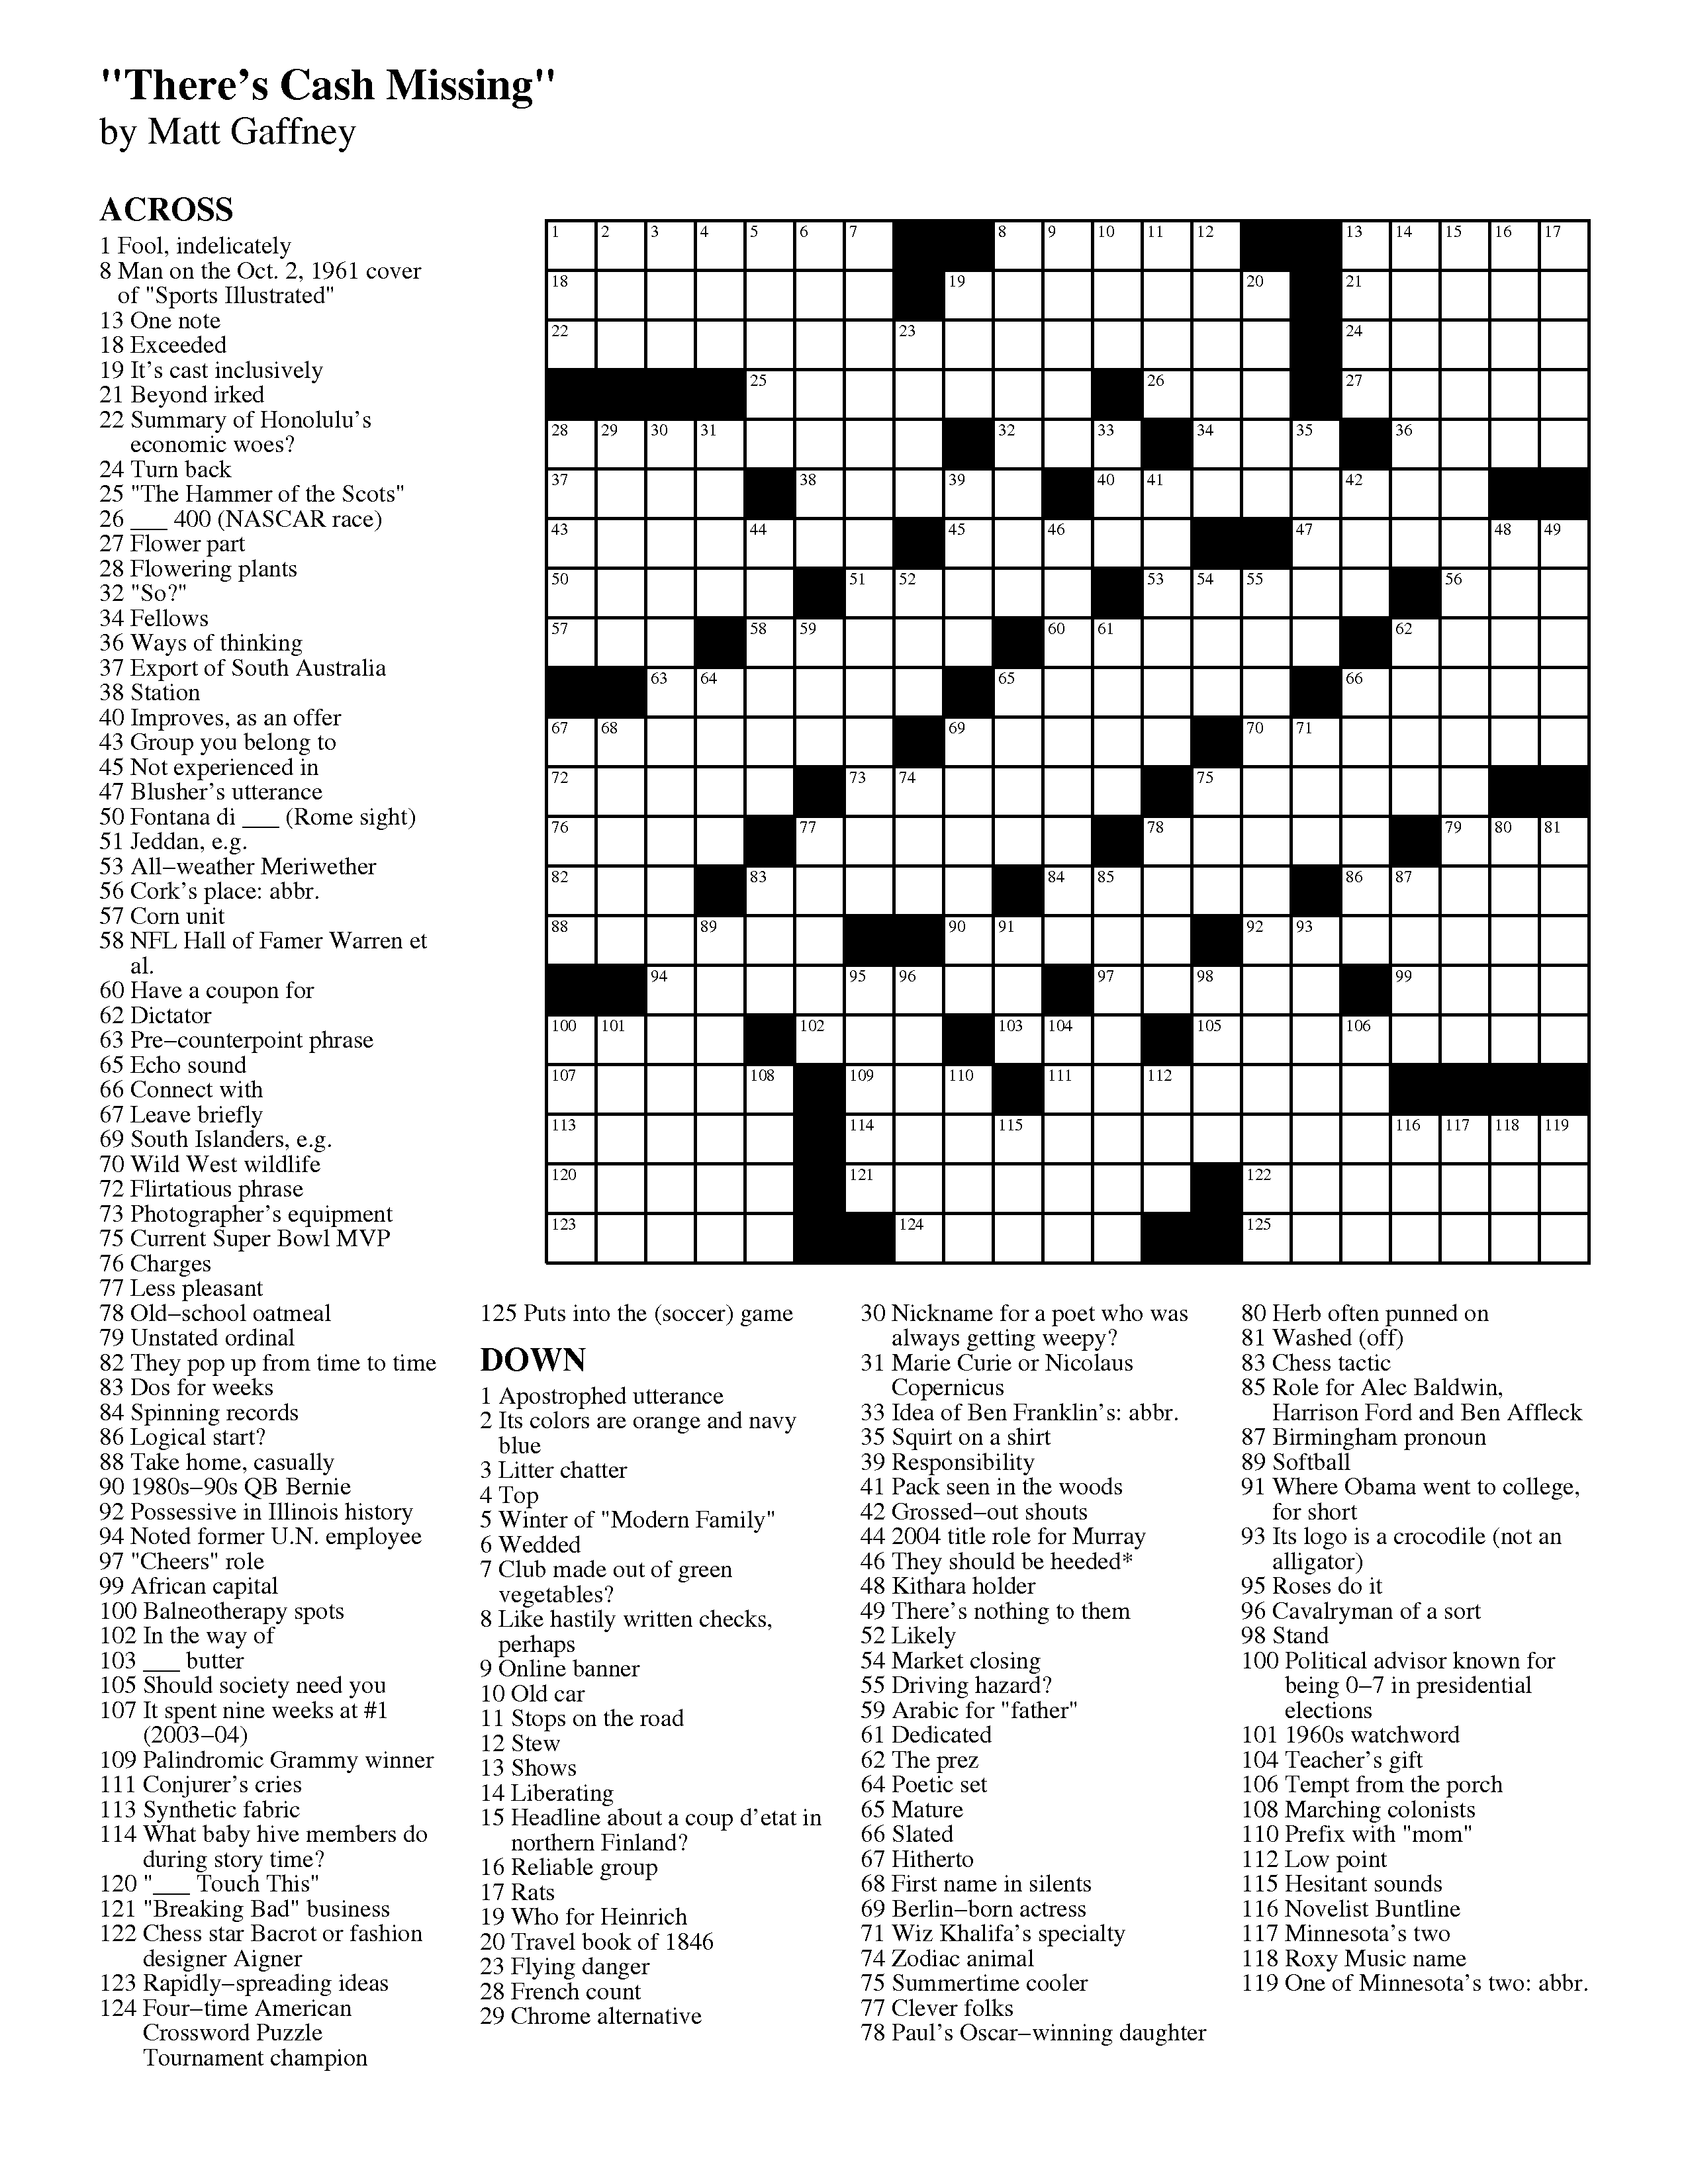 February 2013 Matt Gaffney #39 s Weekly Crossword Contest